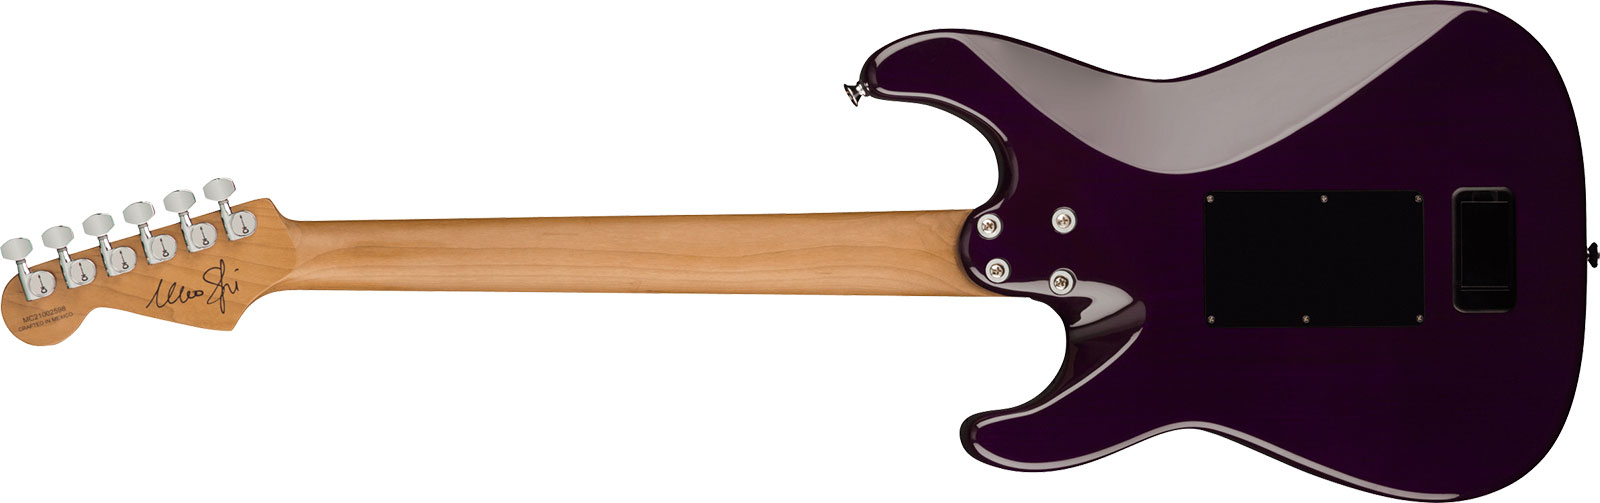 Charvel Marco Sfogli So Cal Style 1 Pro Mod Signature Hss Emg Fr Mn - Transparent Purple Burst - Signature electric guitar - Variation 1